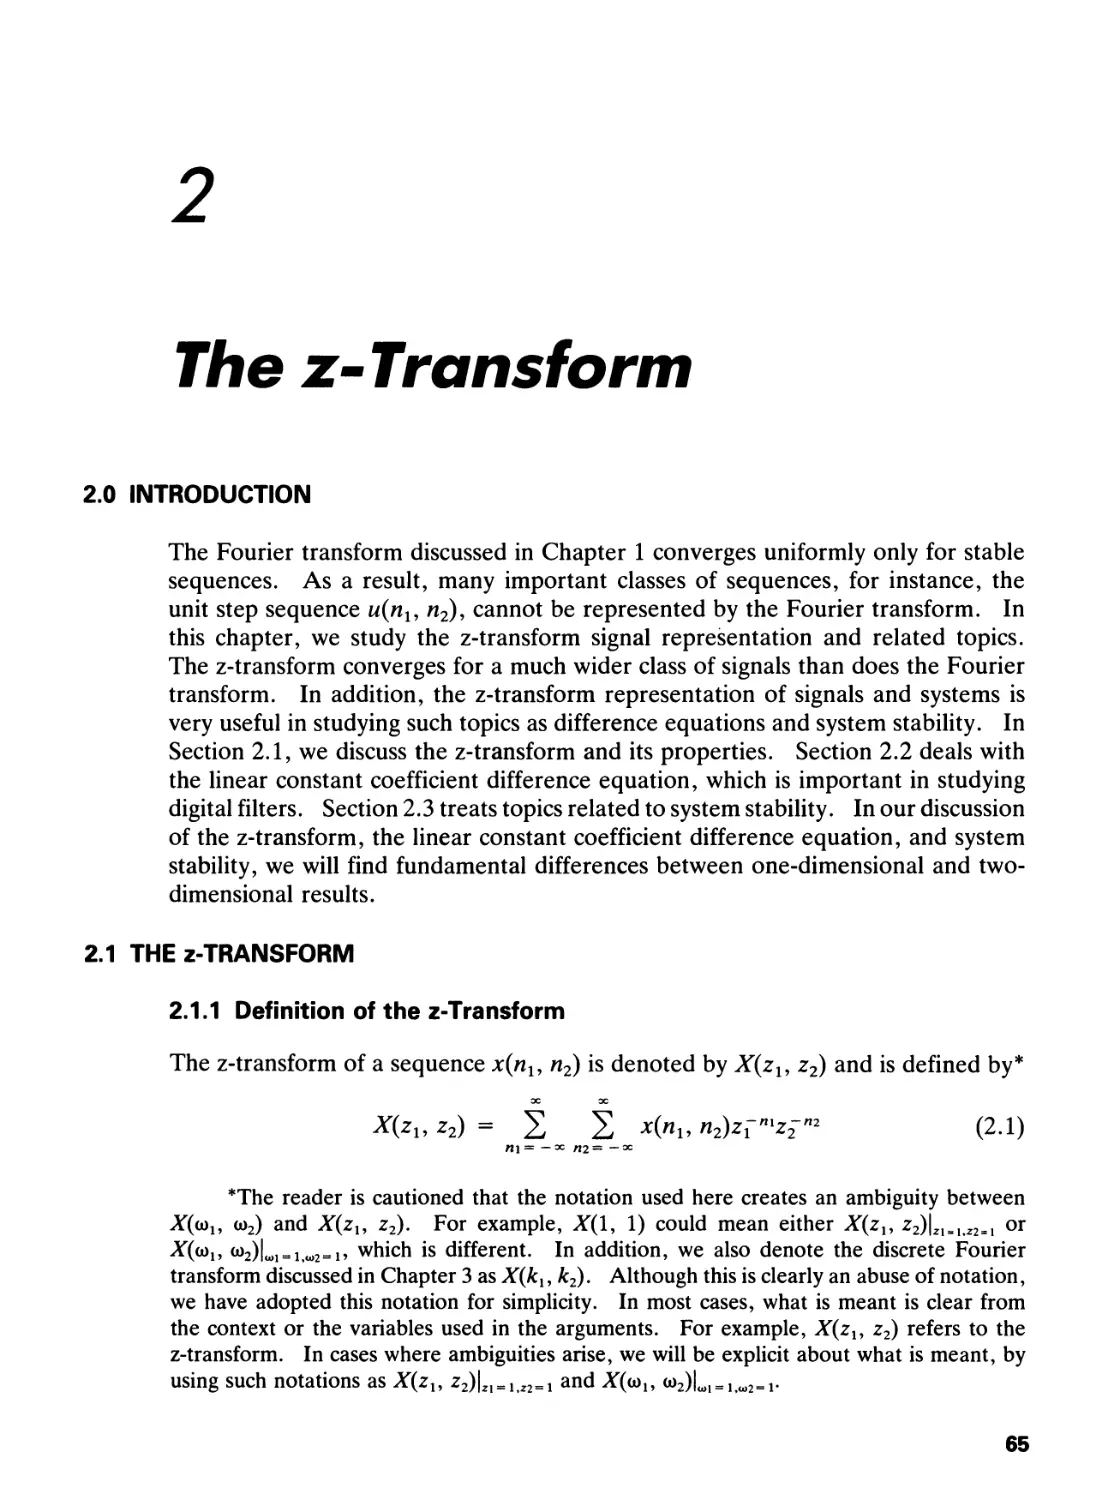 2 THE Z-TRANSFORM
2.1 The z-Transform